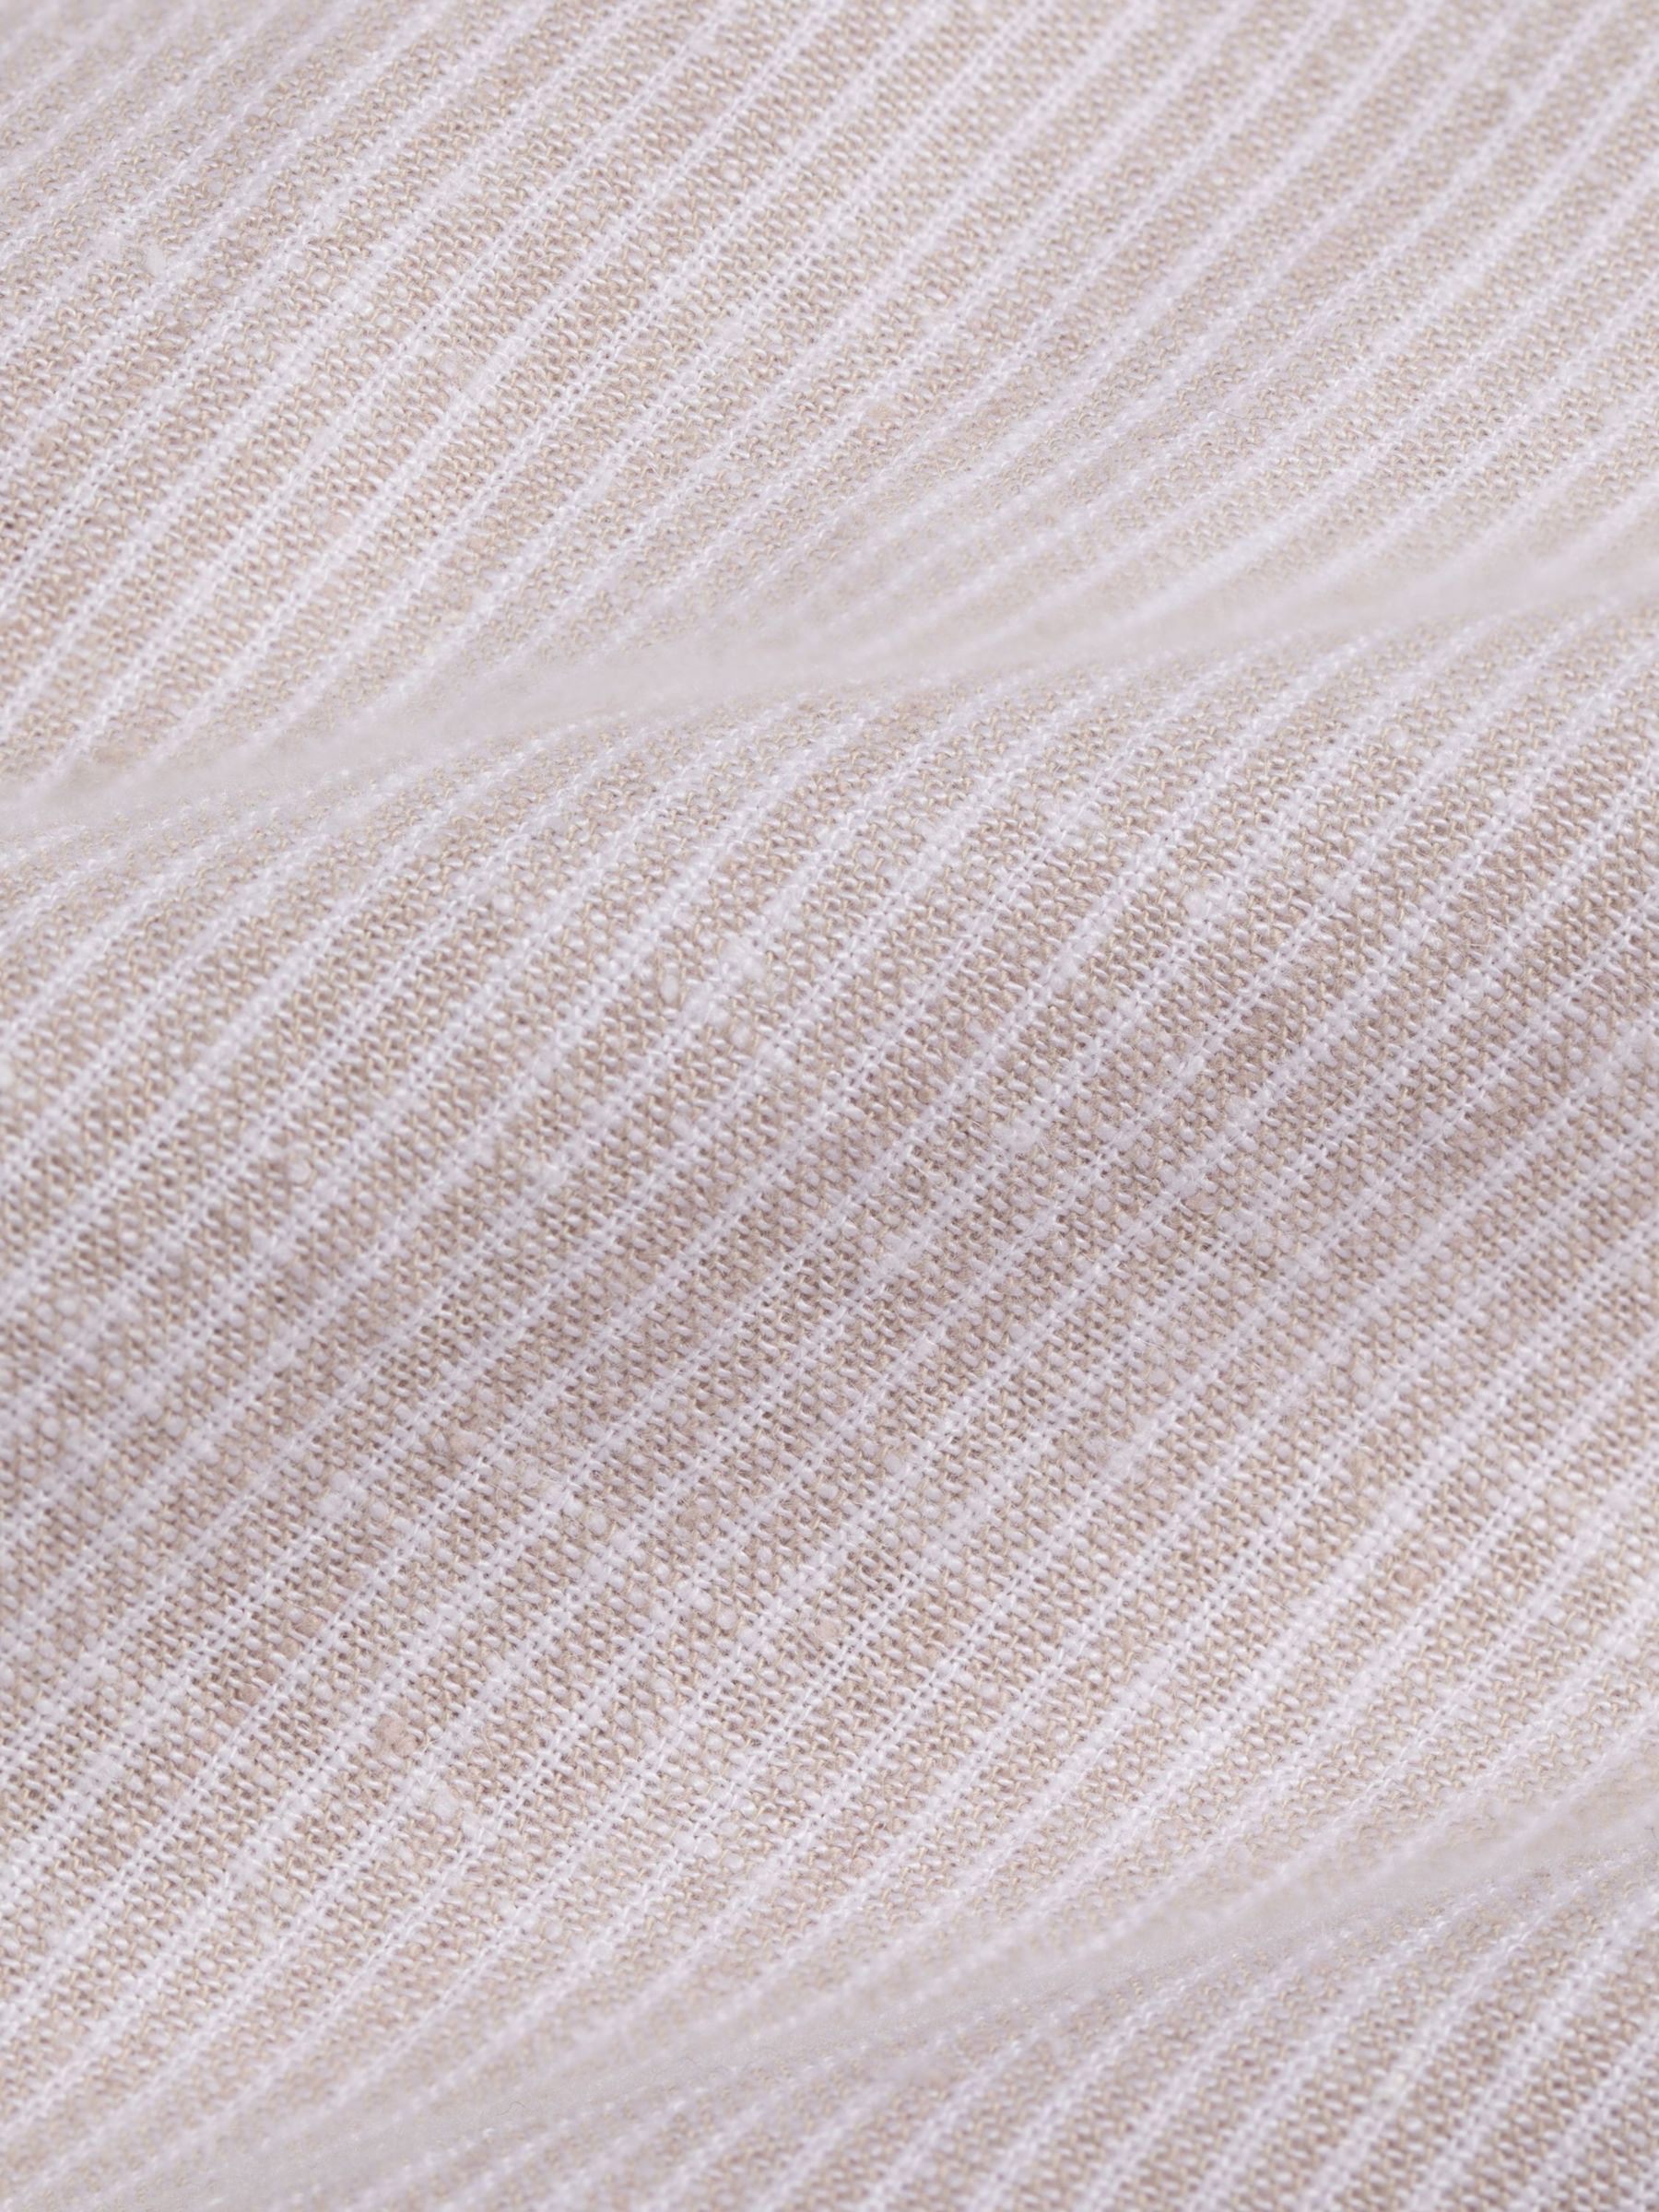 Chelsea Peers Linen Blend Micro Stripe Shirt, Beige, L